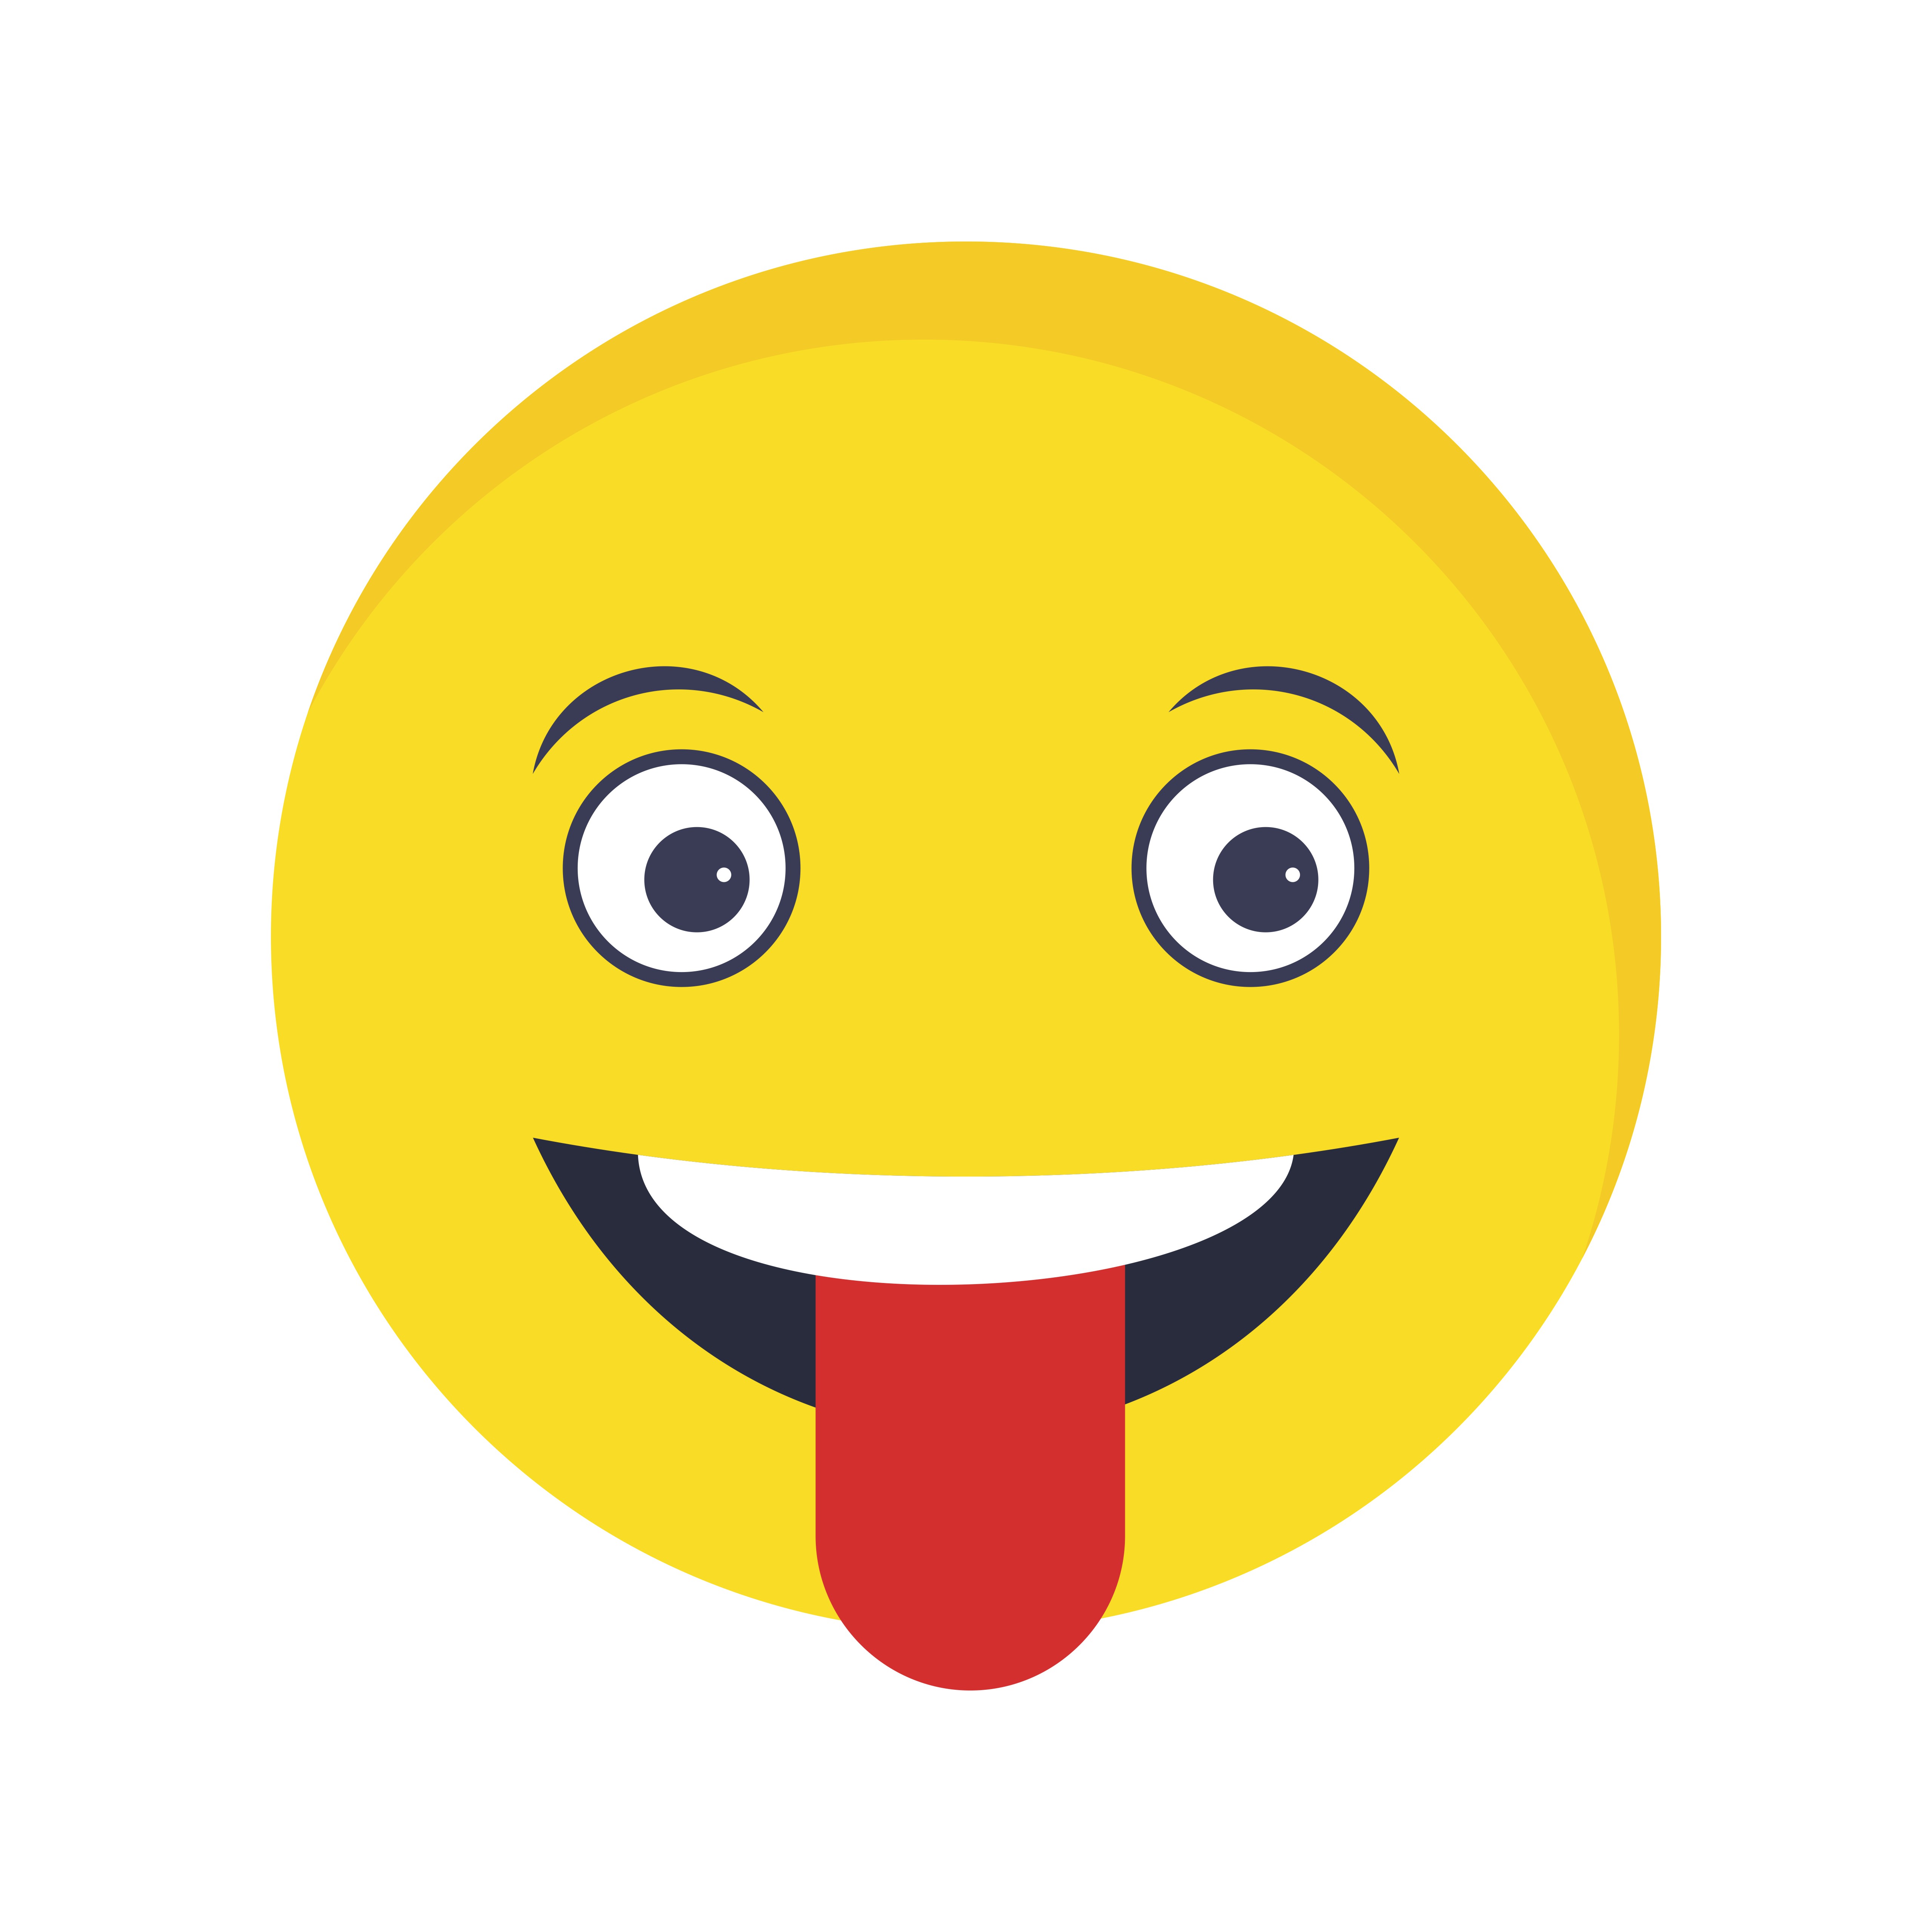 Download Tongue Emoji Vector Icon - Download Free Vectors, Clipart ...